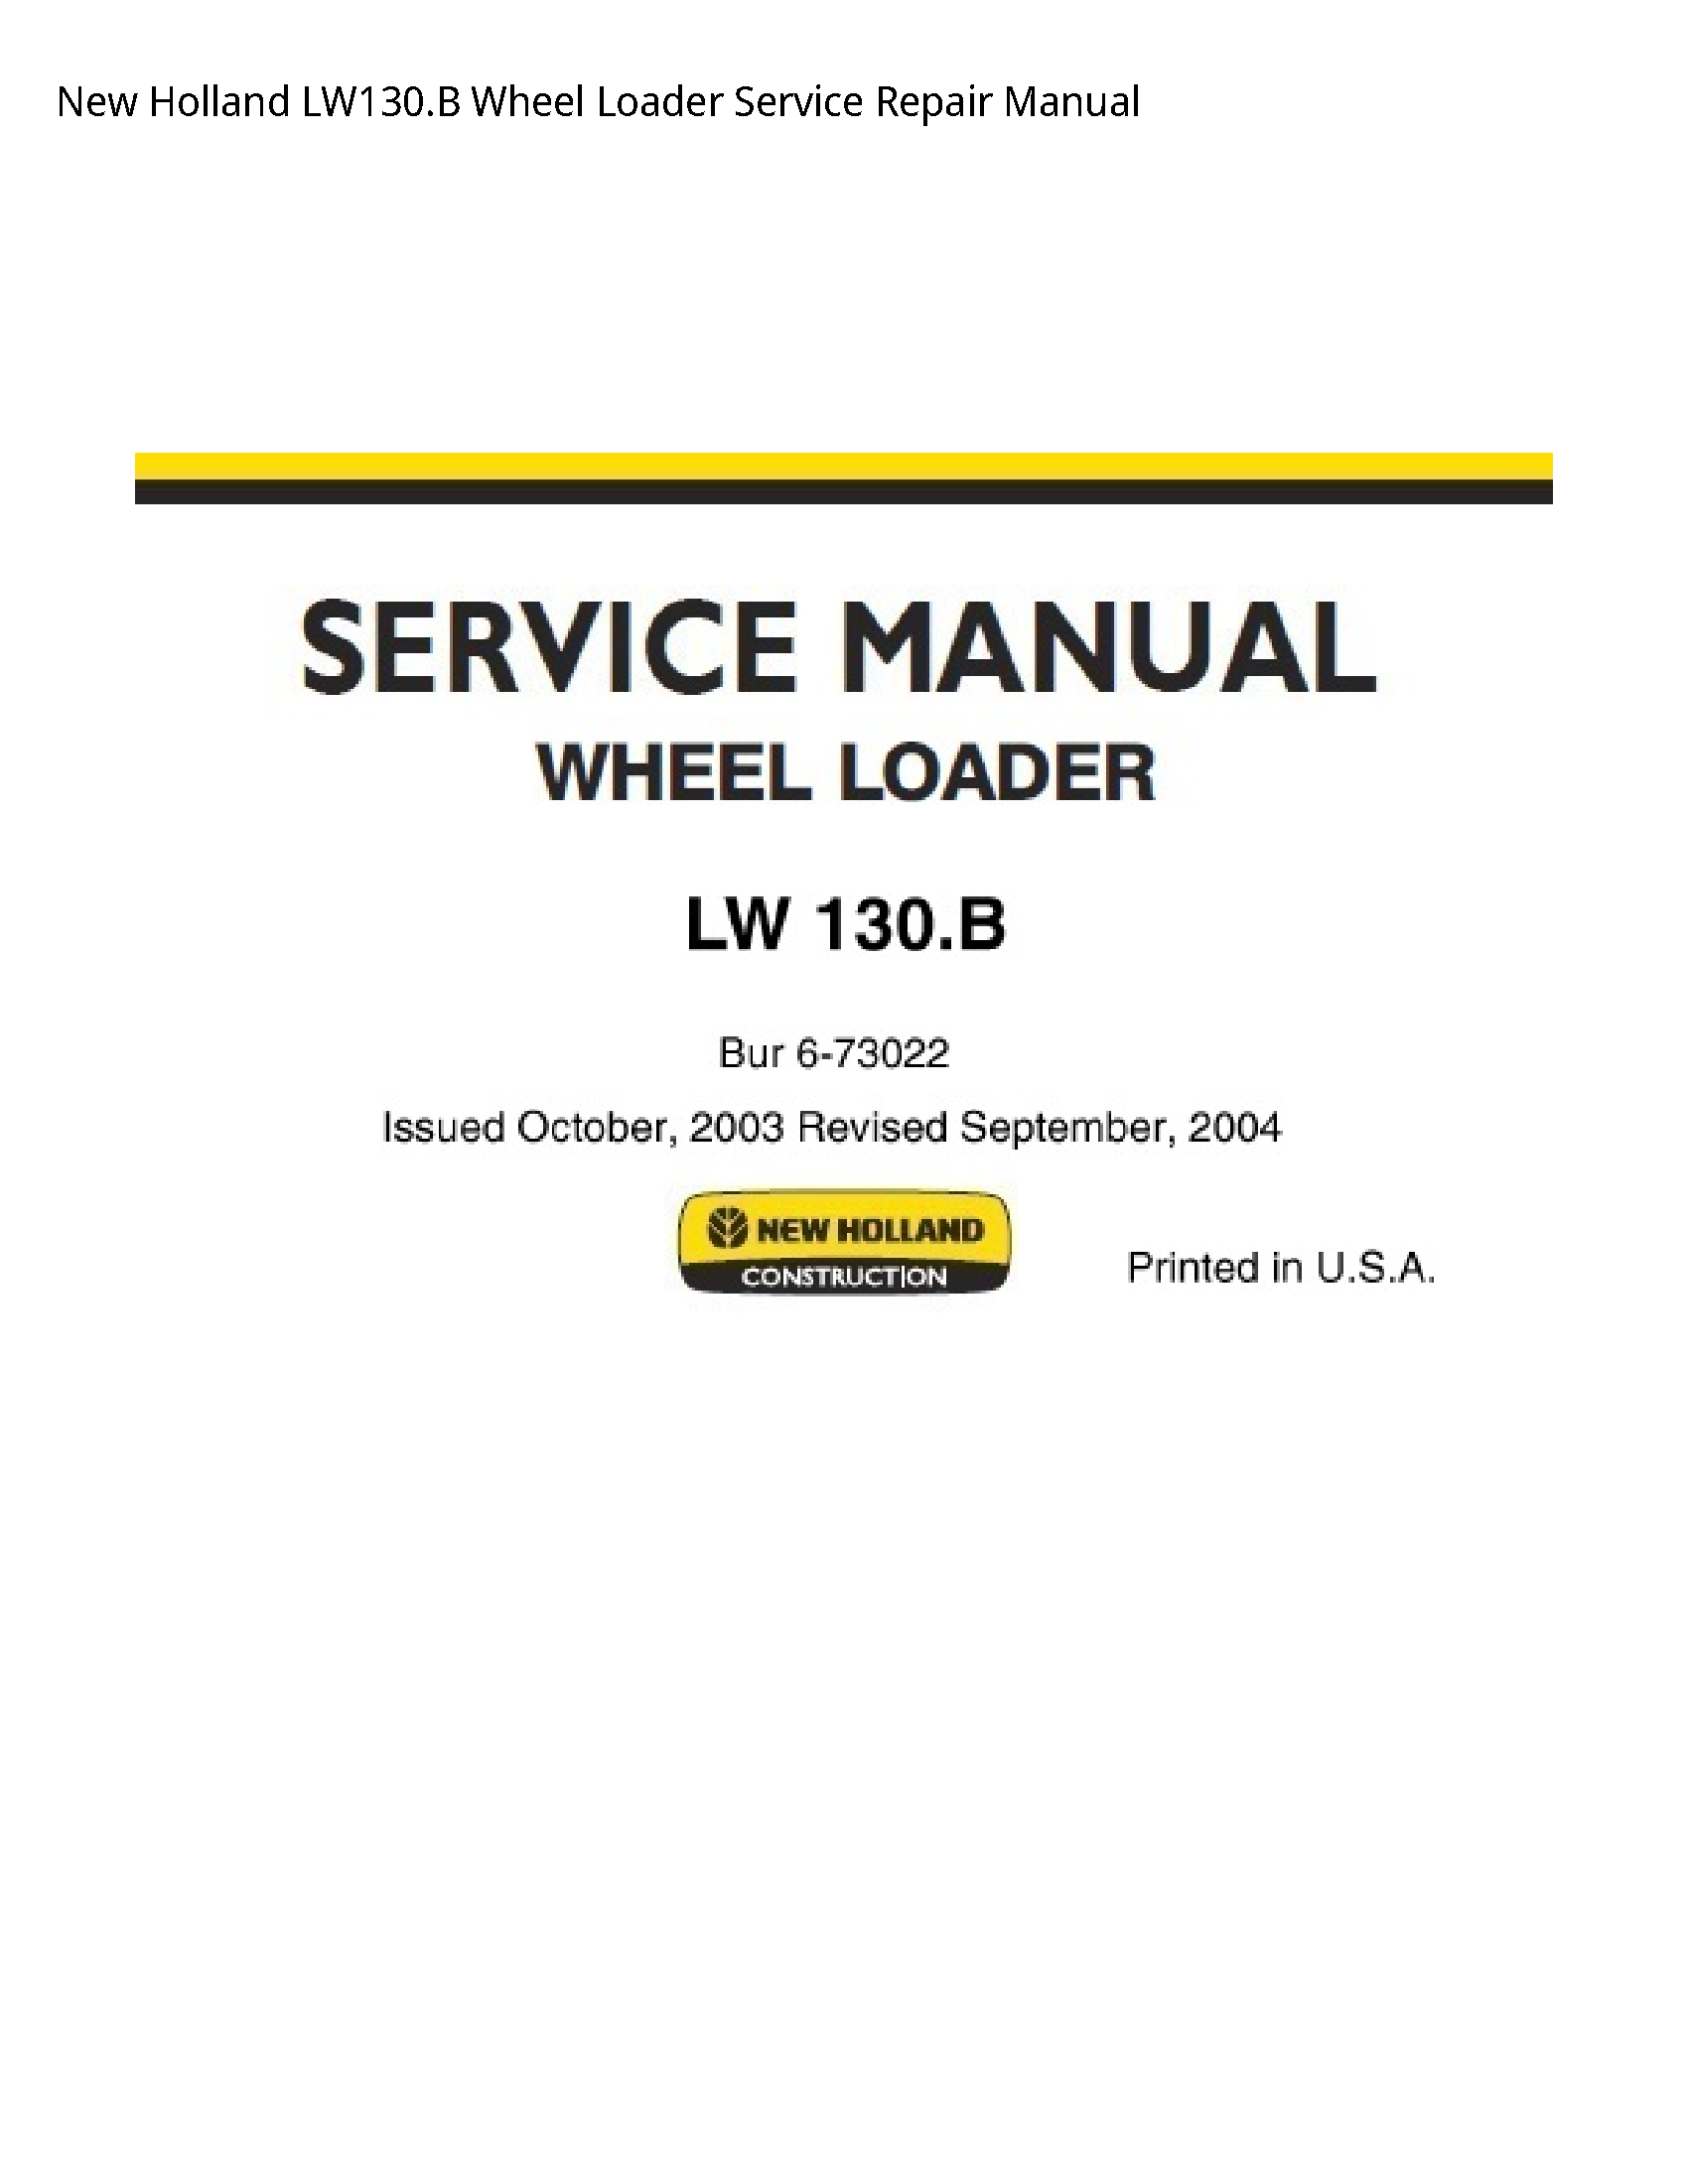 New Holland LW130.B Wheel Loader manual